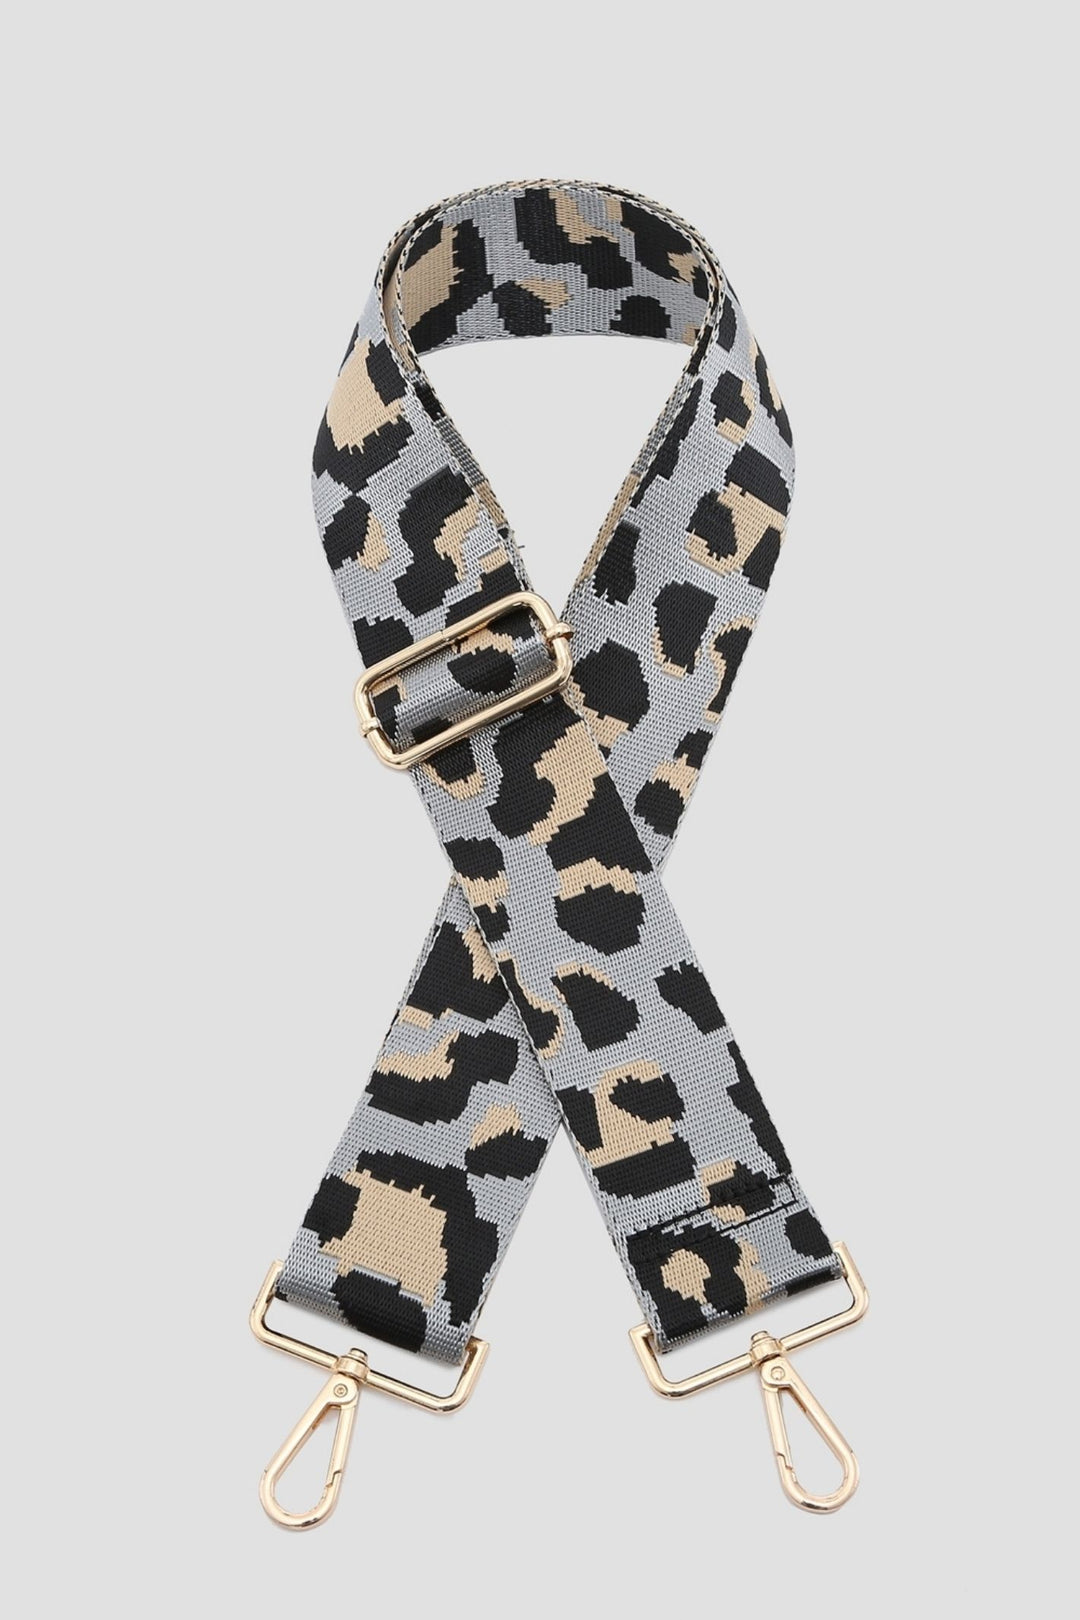 Leopard Print Interchangeable Bag Strap Grey Sand Black - Sugarplum Boutique